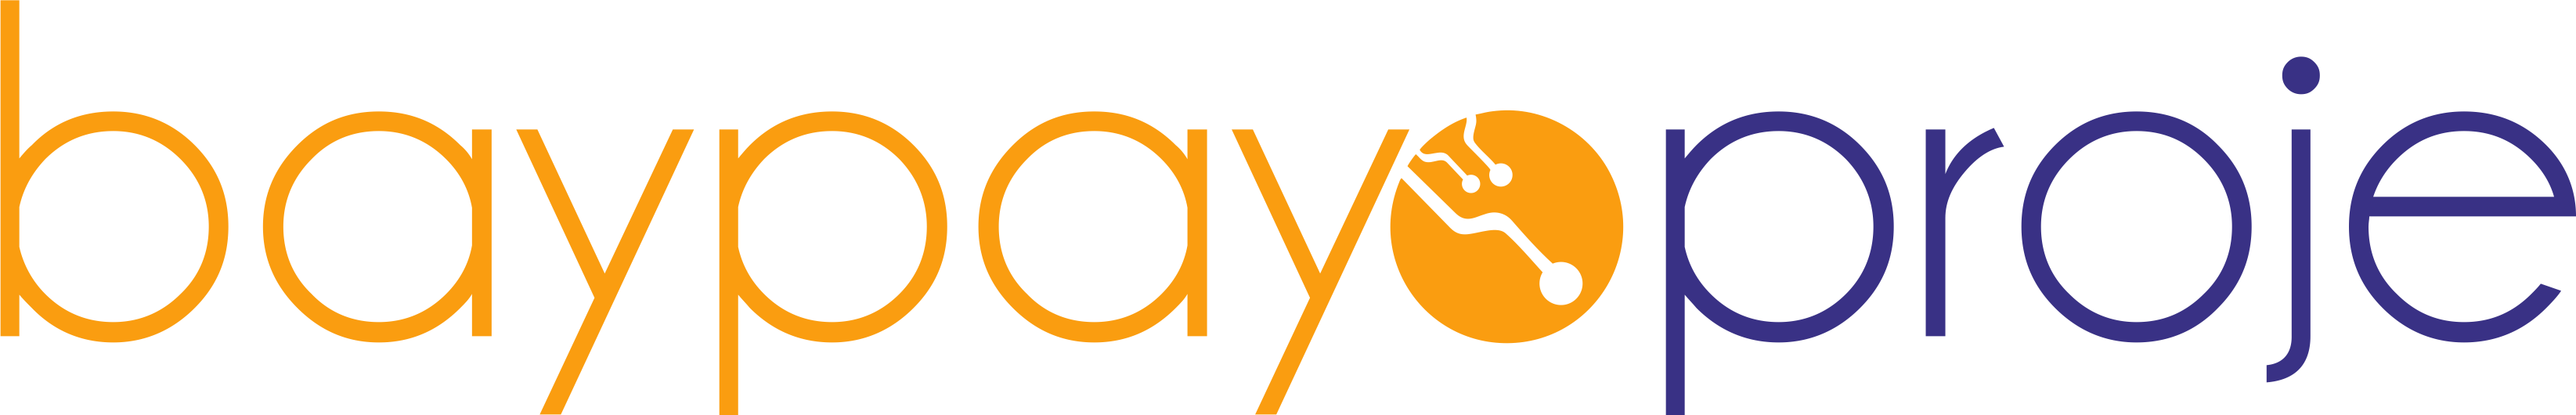 baypayo proje